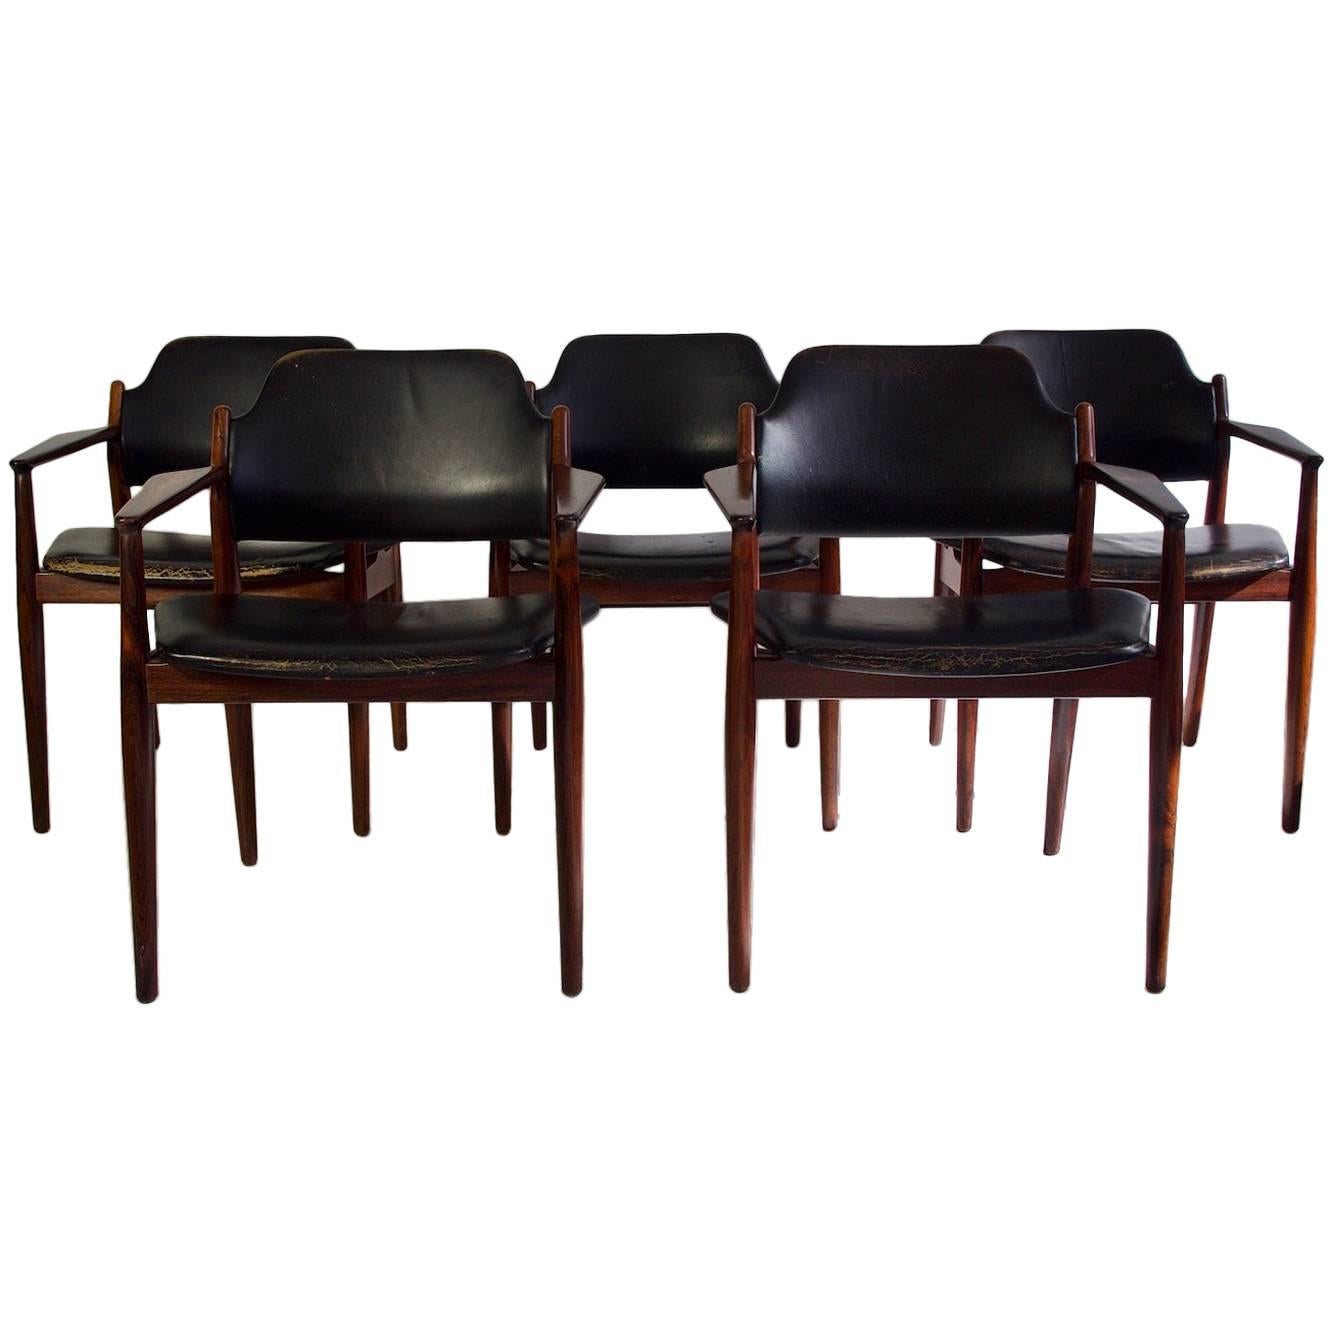 Arne Vodder for Sibast Black Leather Chairs, Model 62 A - 1961